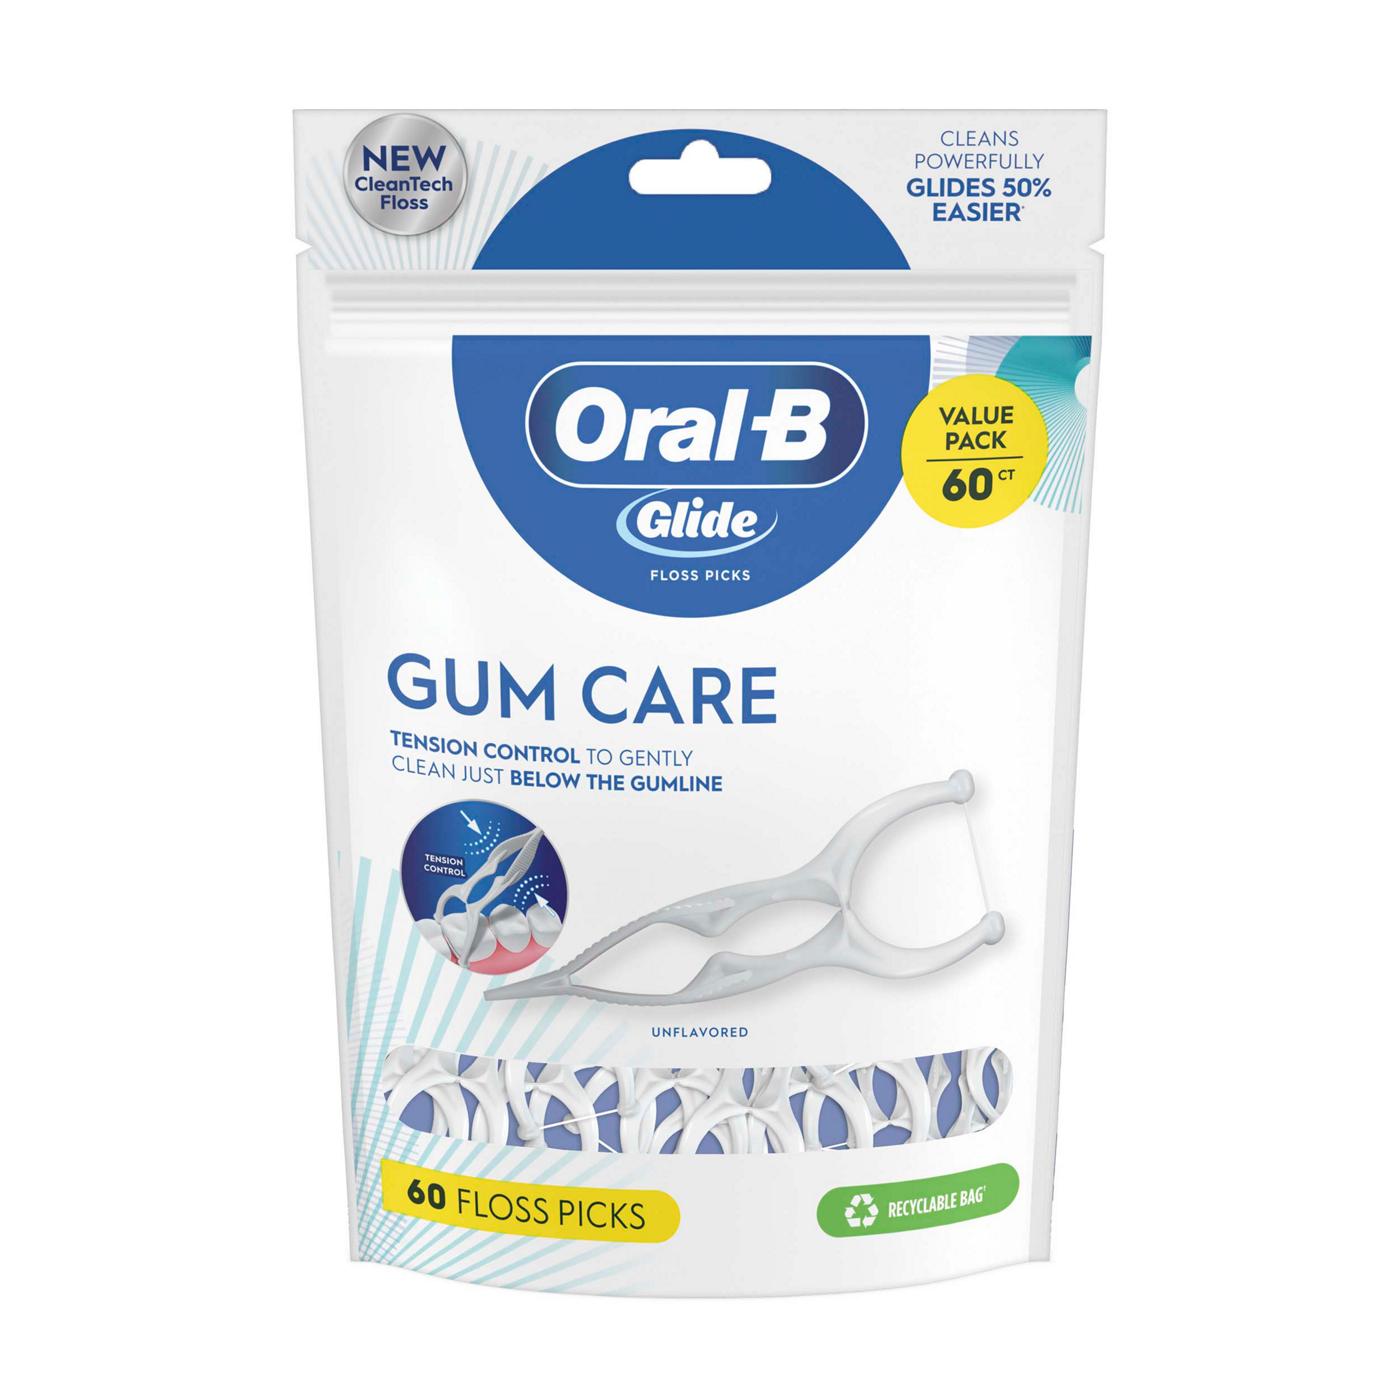 Oral-B Glide Gum Care Floss Picks Value Pack; image 1 of 8